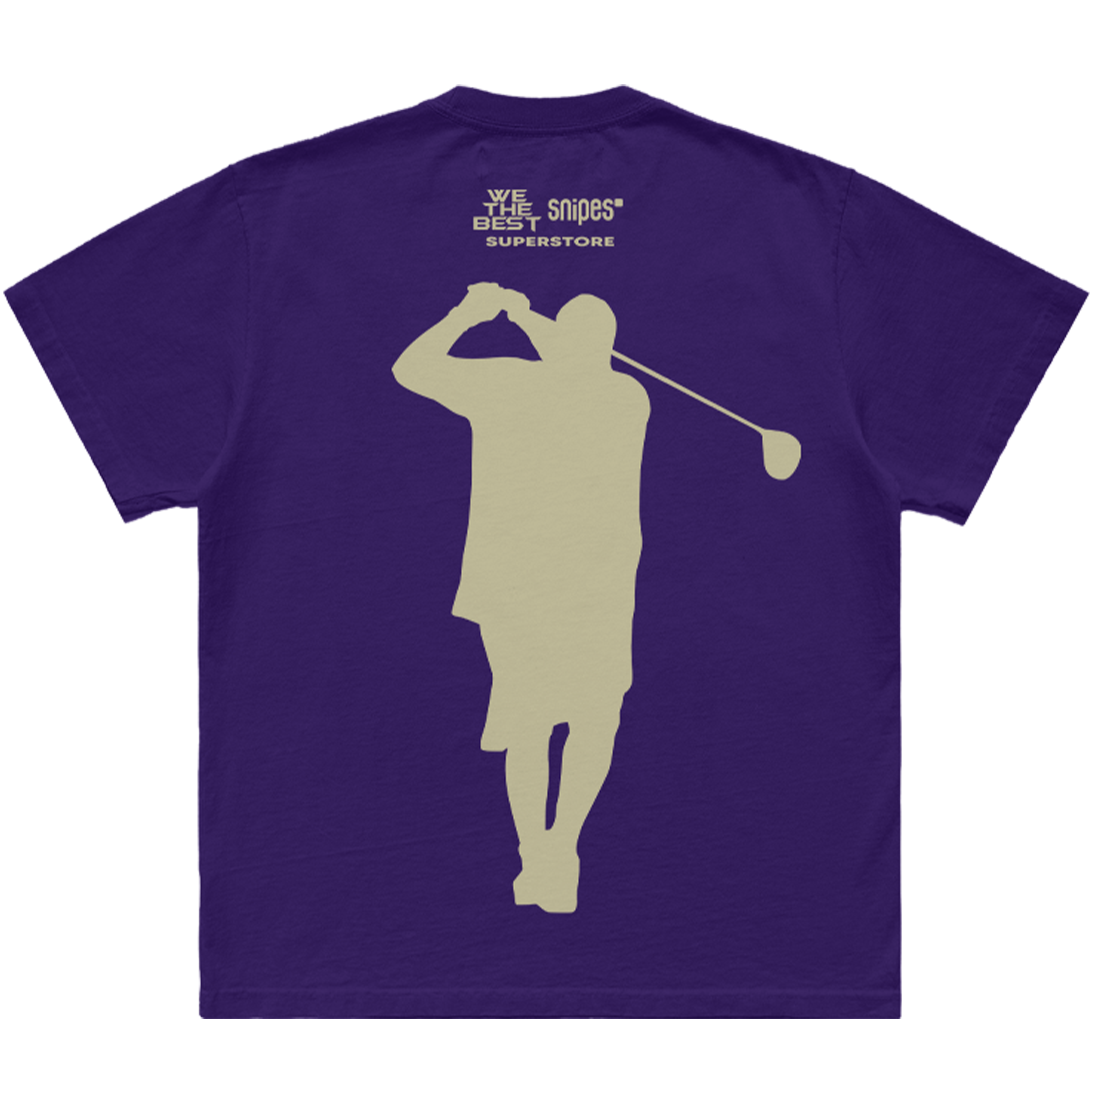 Let's Go Golfing T-Shirt - Purple Back